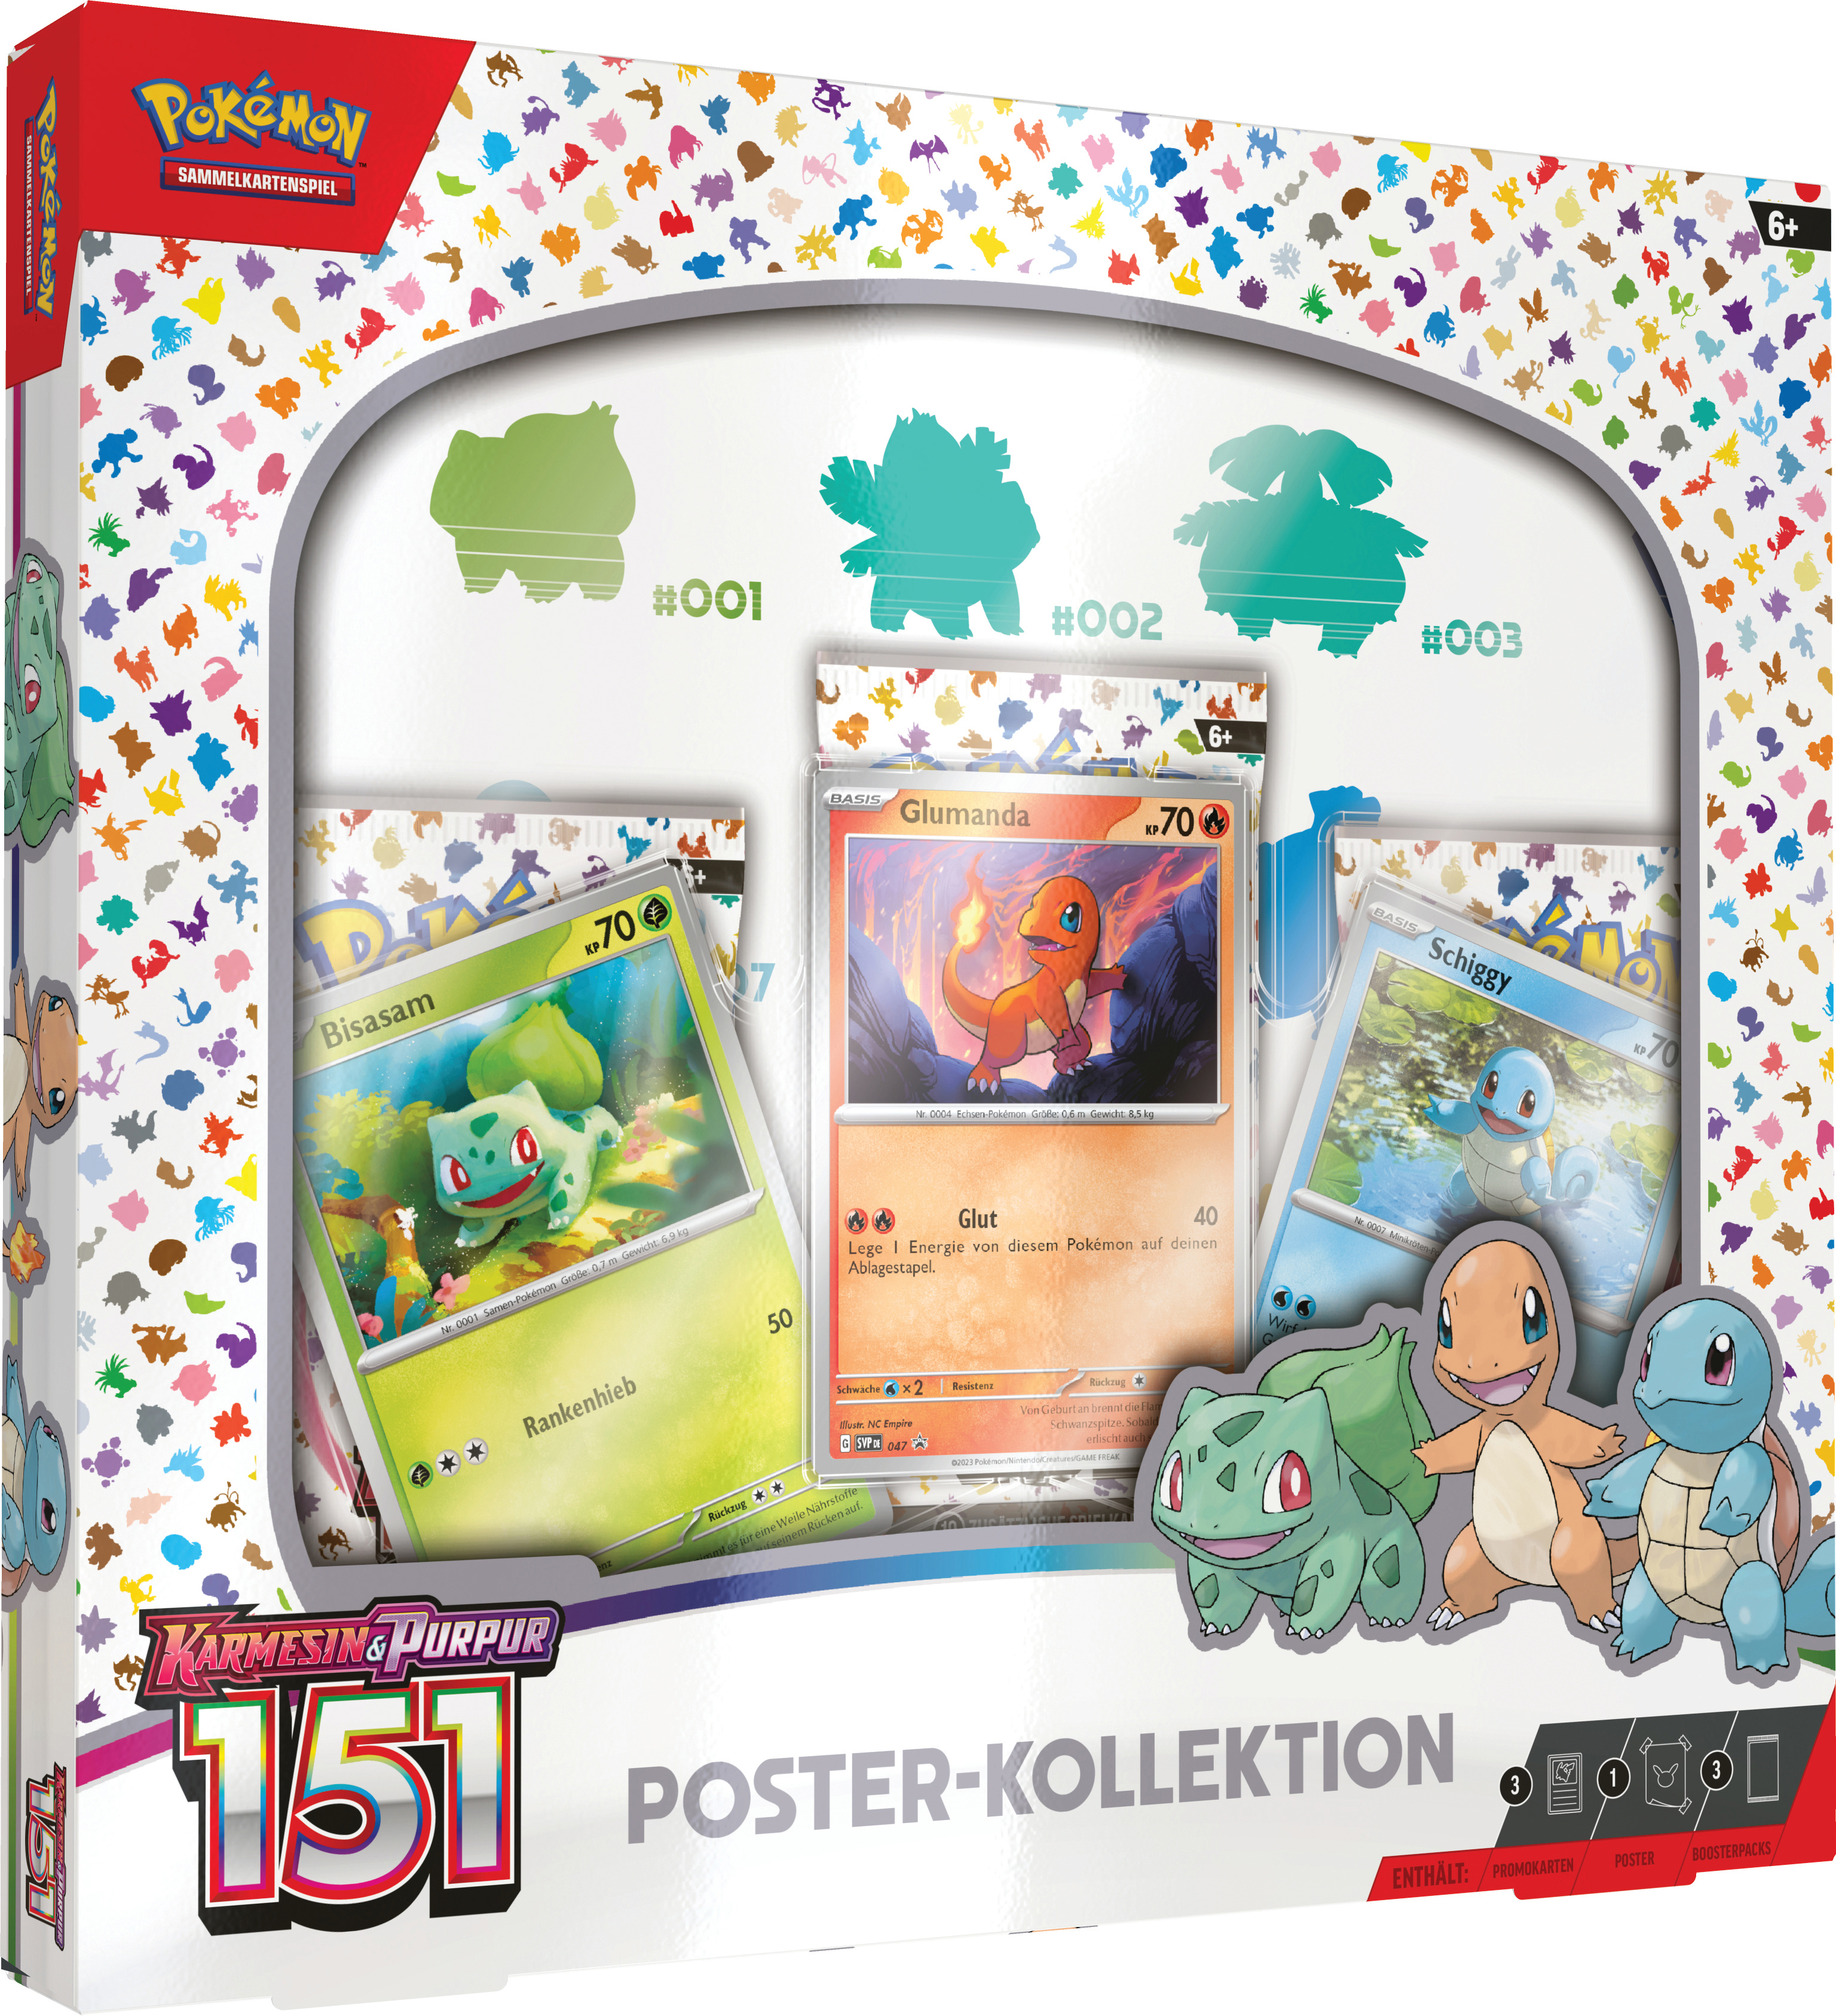 THE POKEMON COMPANY INT. 45557 Pokémon KP03.5 Sammelkarten Poster 151 Box